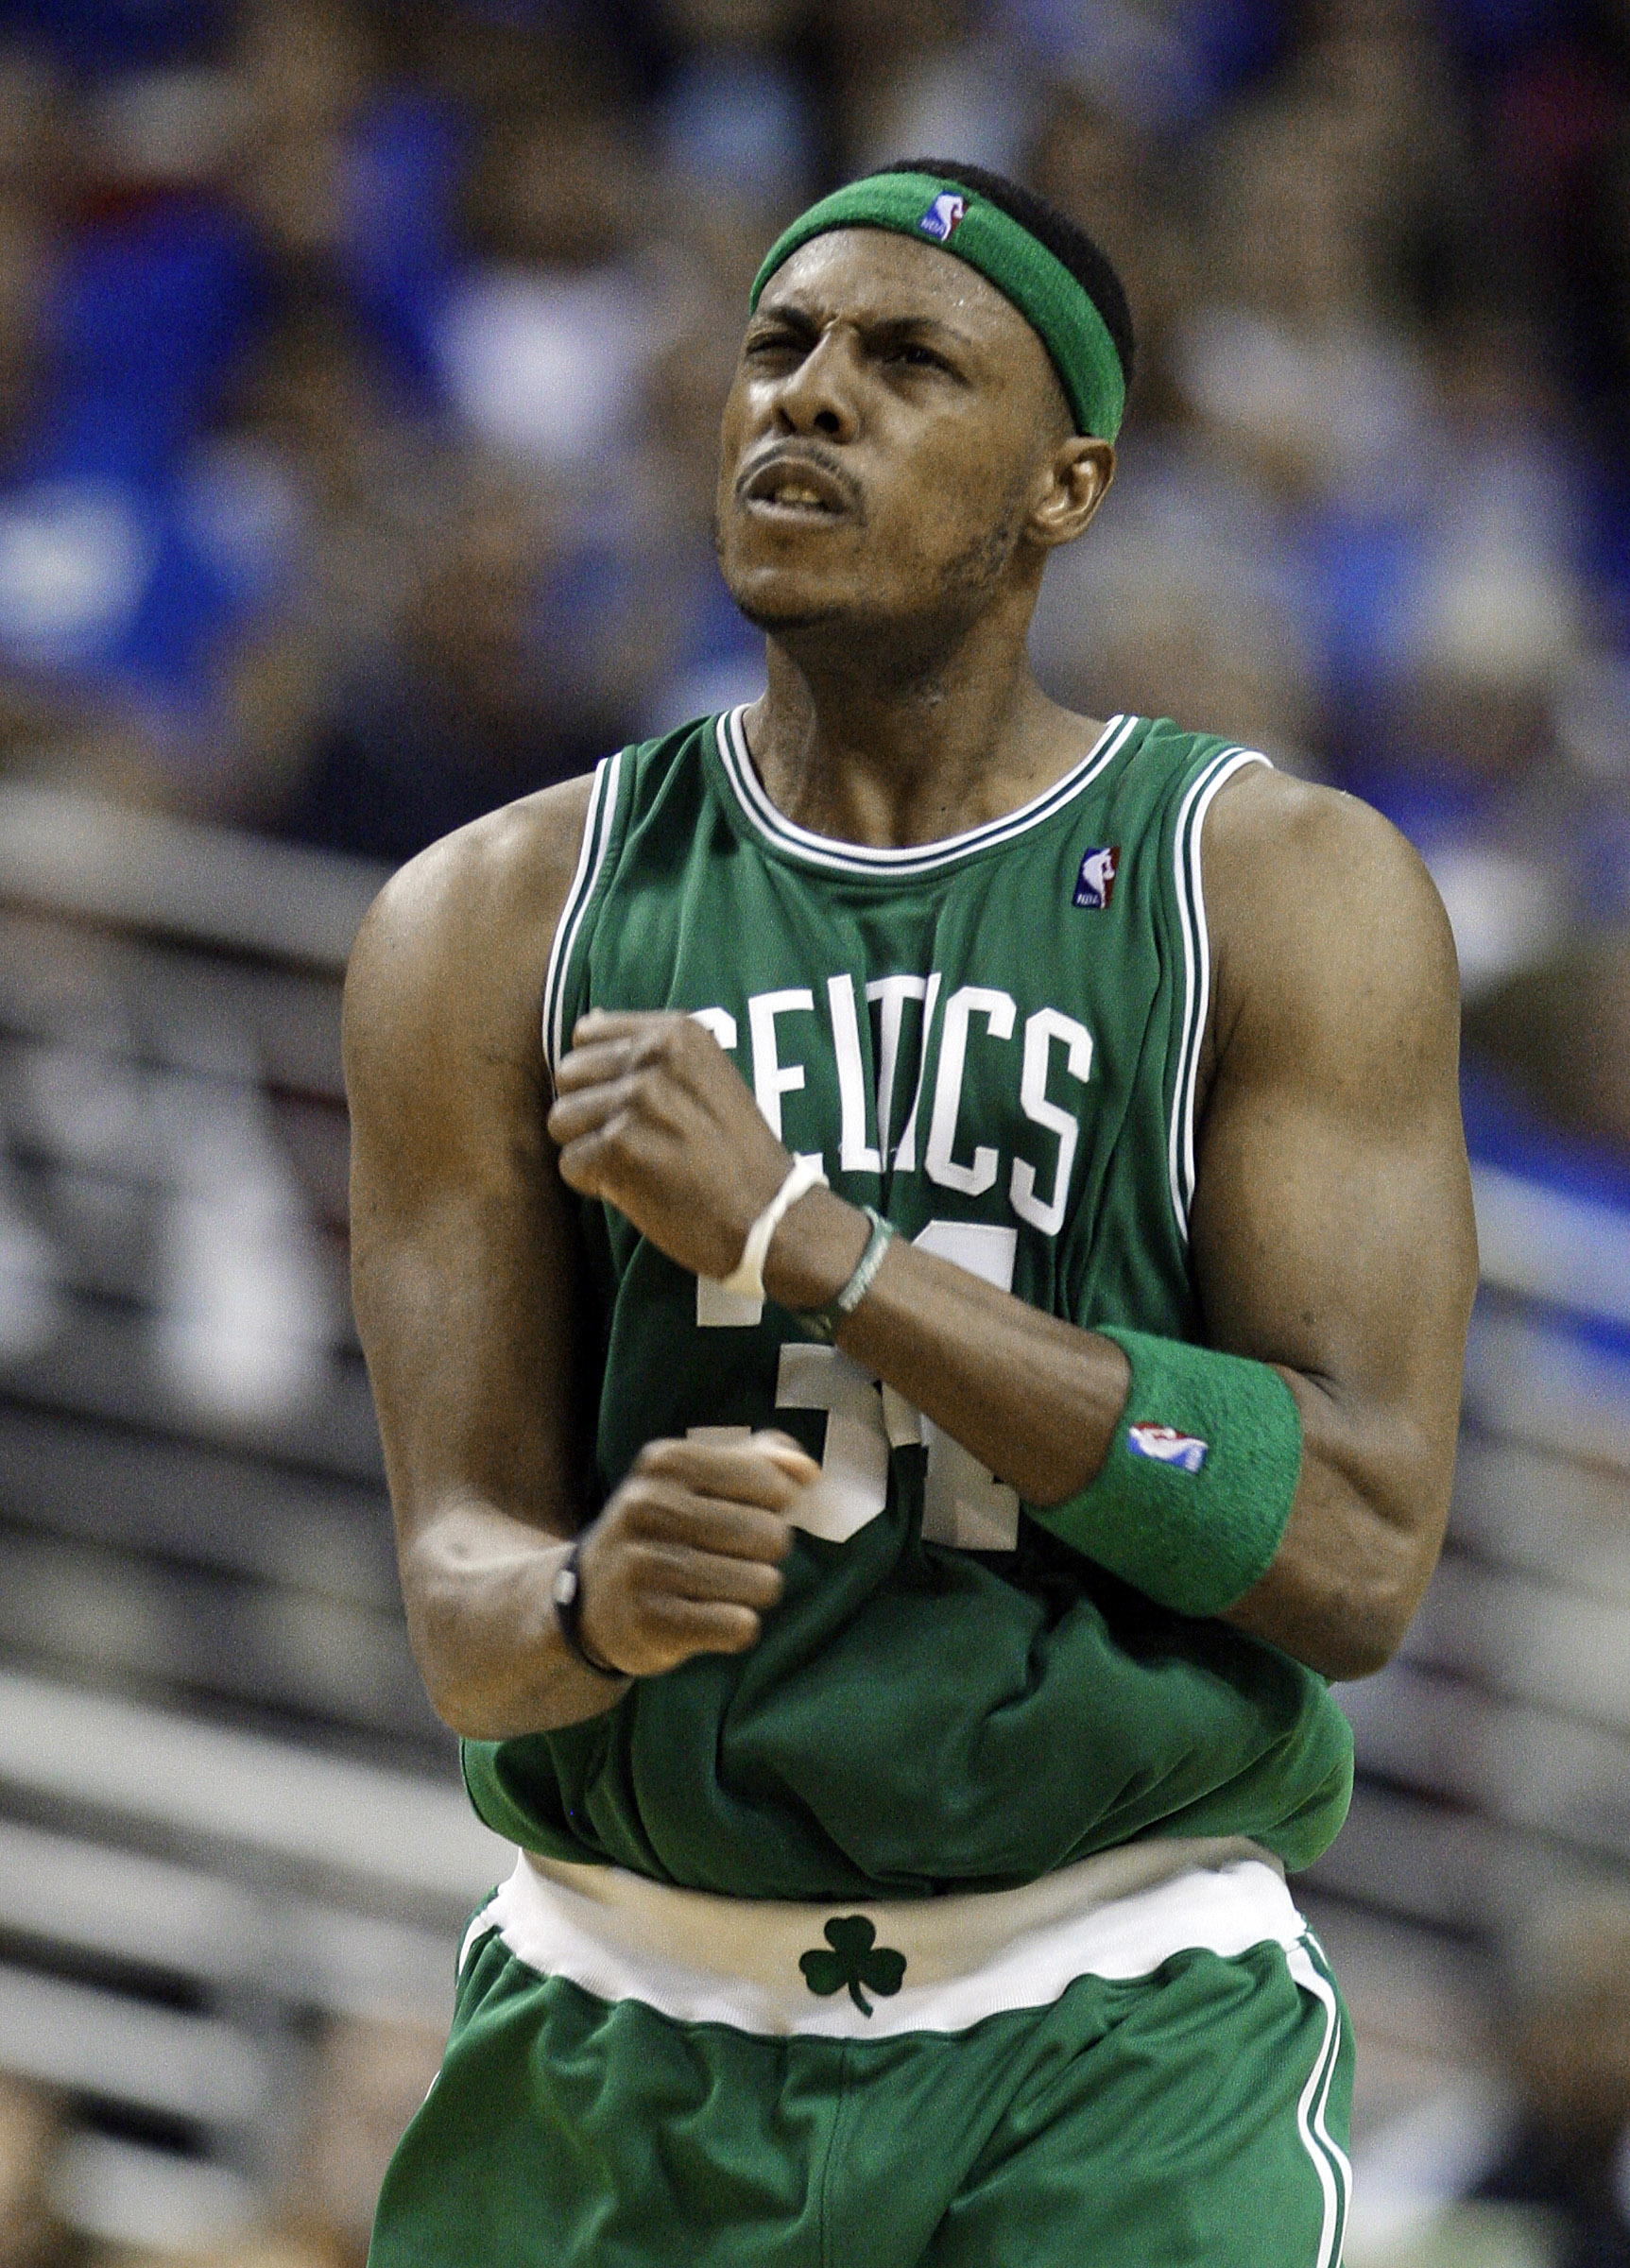 1998-1999 Paul Pierce Game Used Issued Boston Celtics Home Rookie Jersey NBA